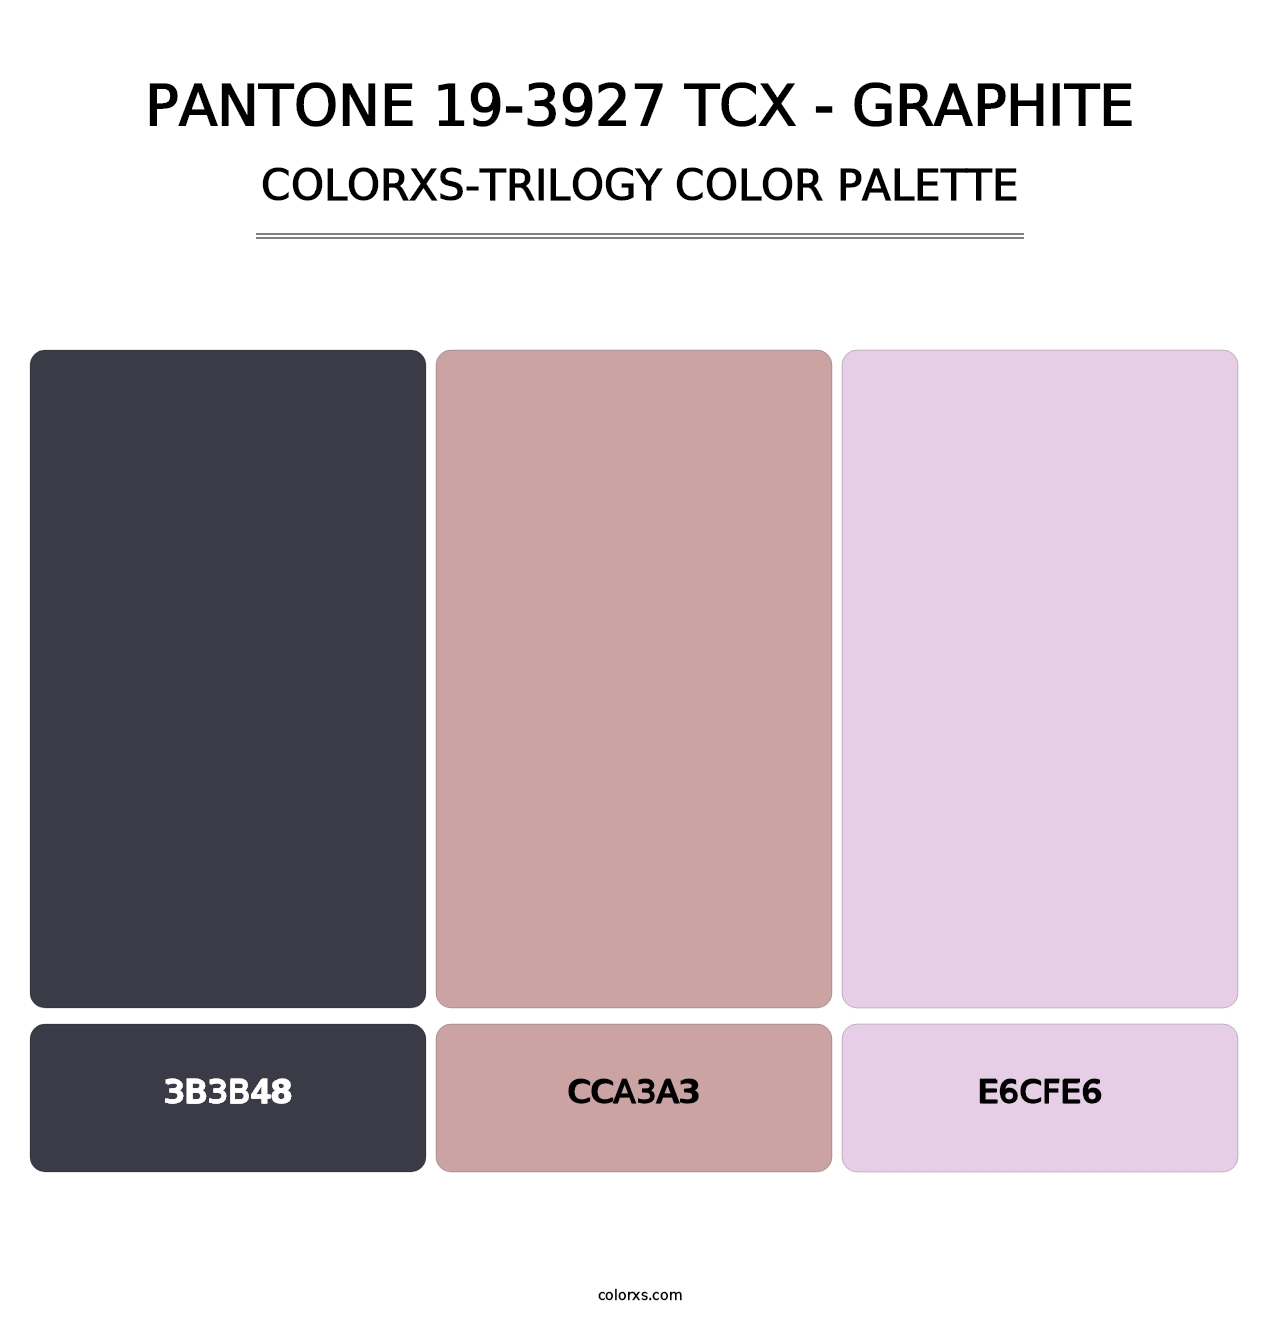 PANTONE 19-3927 TCX - Graphite - Colorxs Trilogy Palette